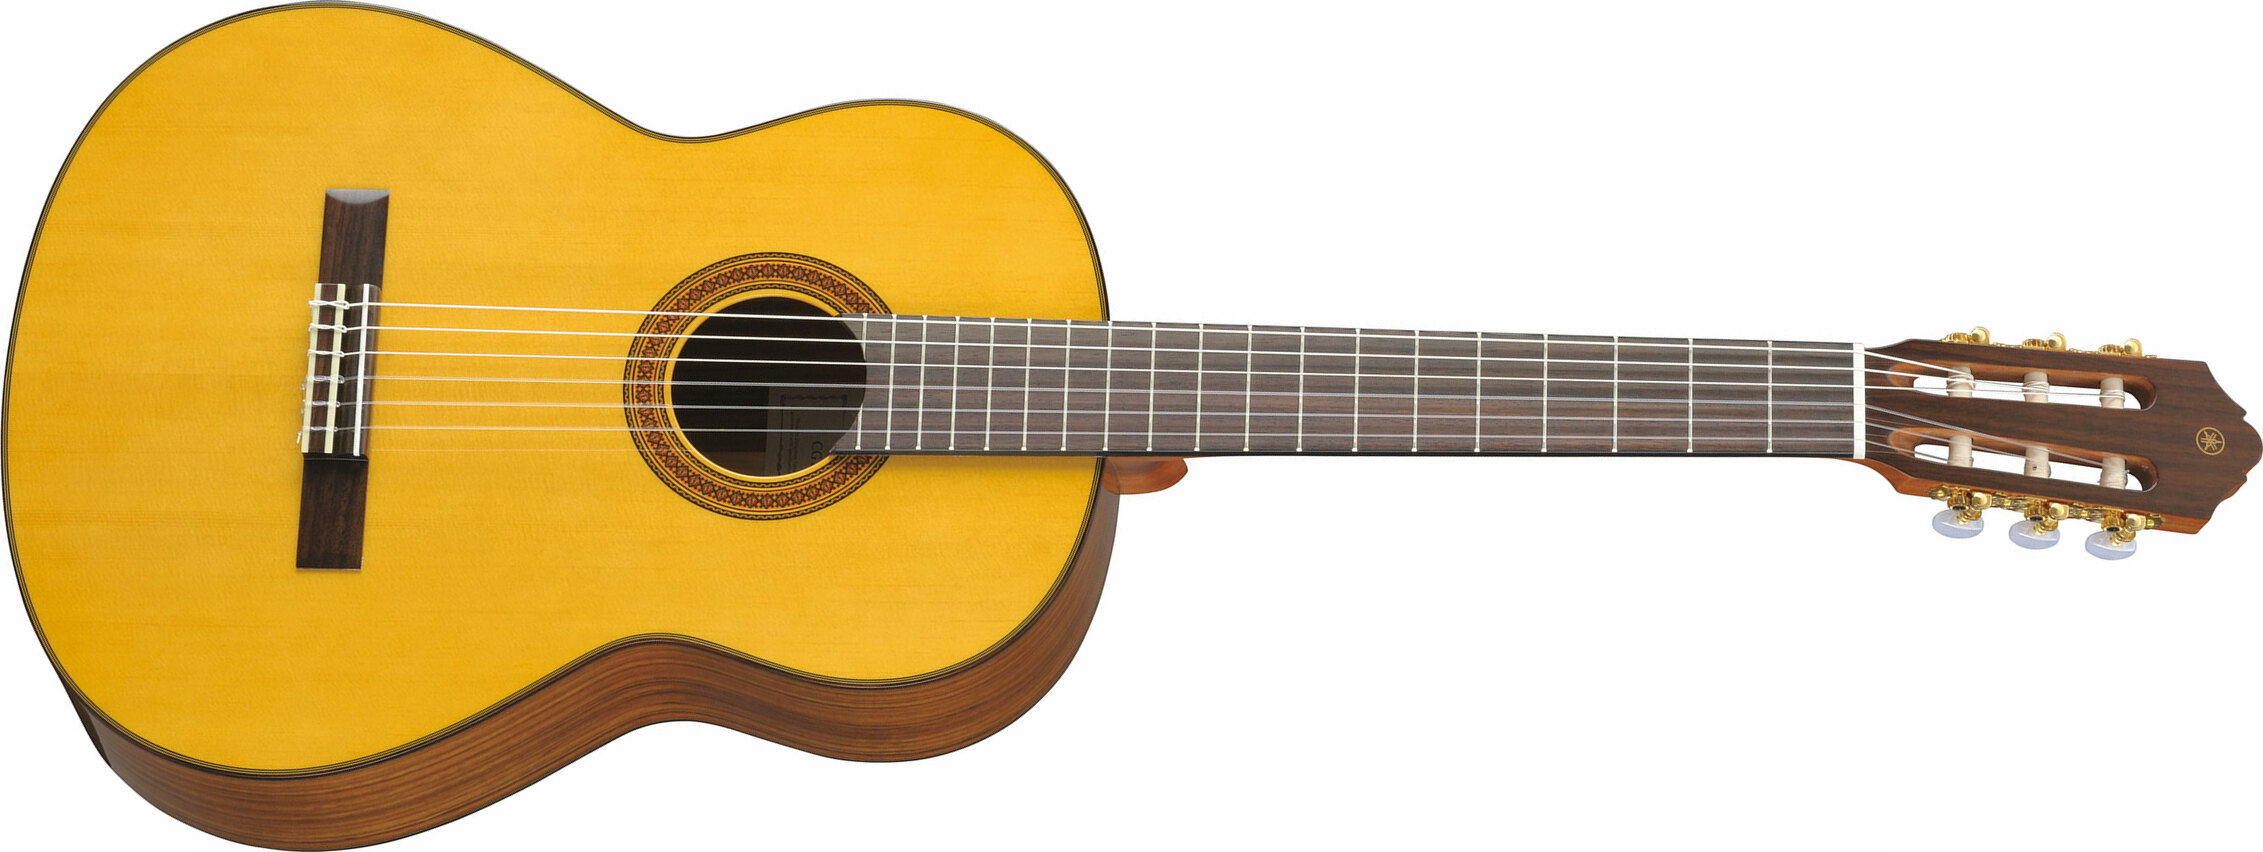 Yamaha Cg162s 4/4 Epicea Ovangkol Rw - Natural - Classical guitar 4/4 size - Main picture